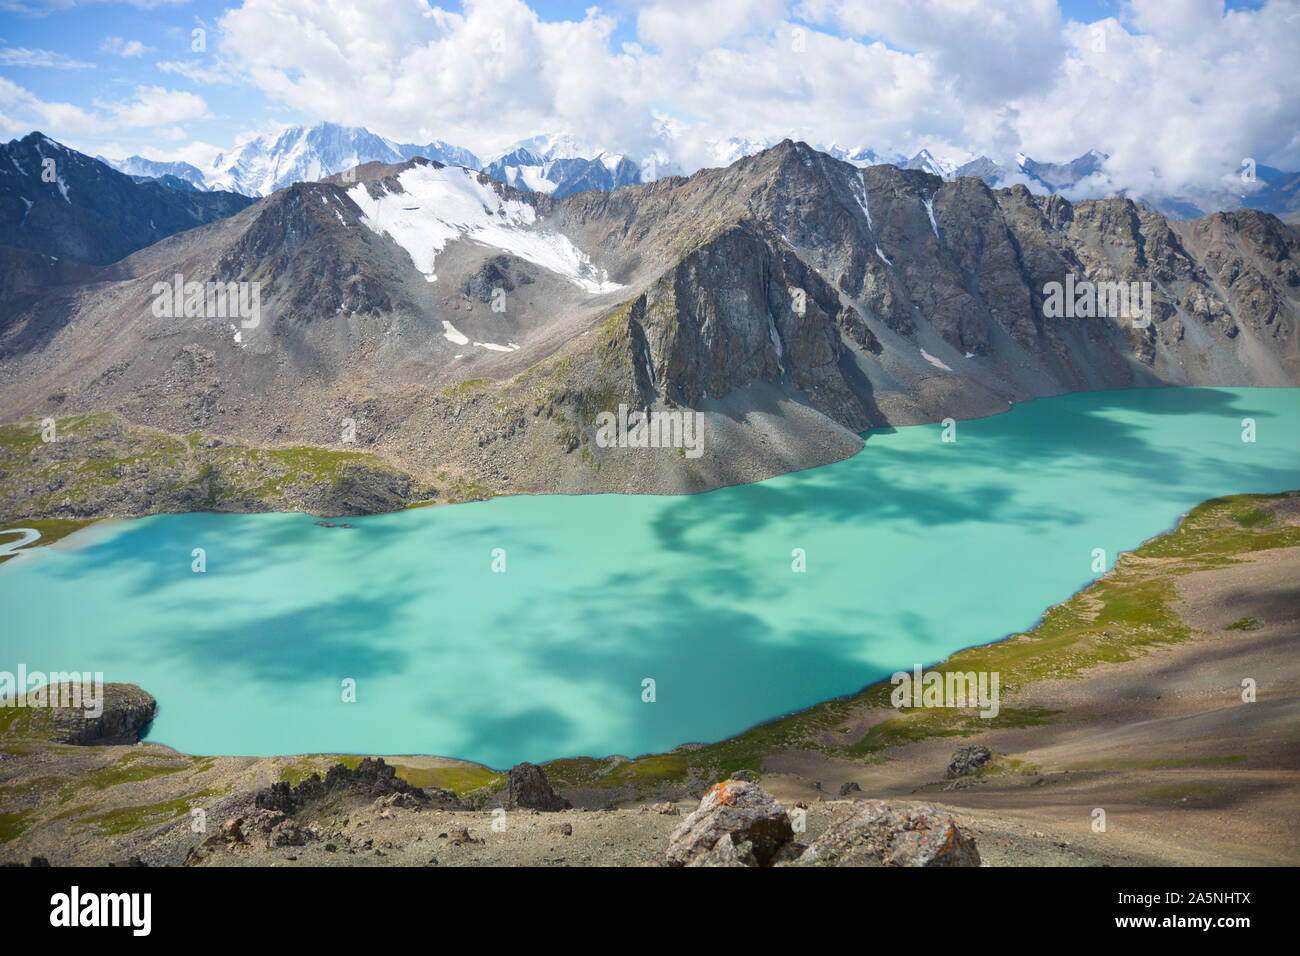 Ala-Kul lake in Terskey Alatoo mountains, Tian-Shan, Karakol, Kyrgyzstan Stock Photo